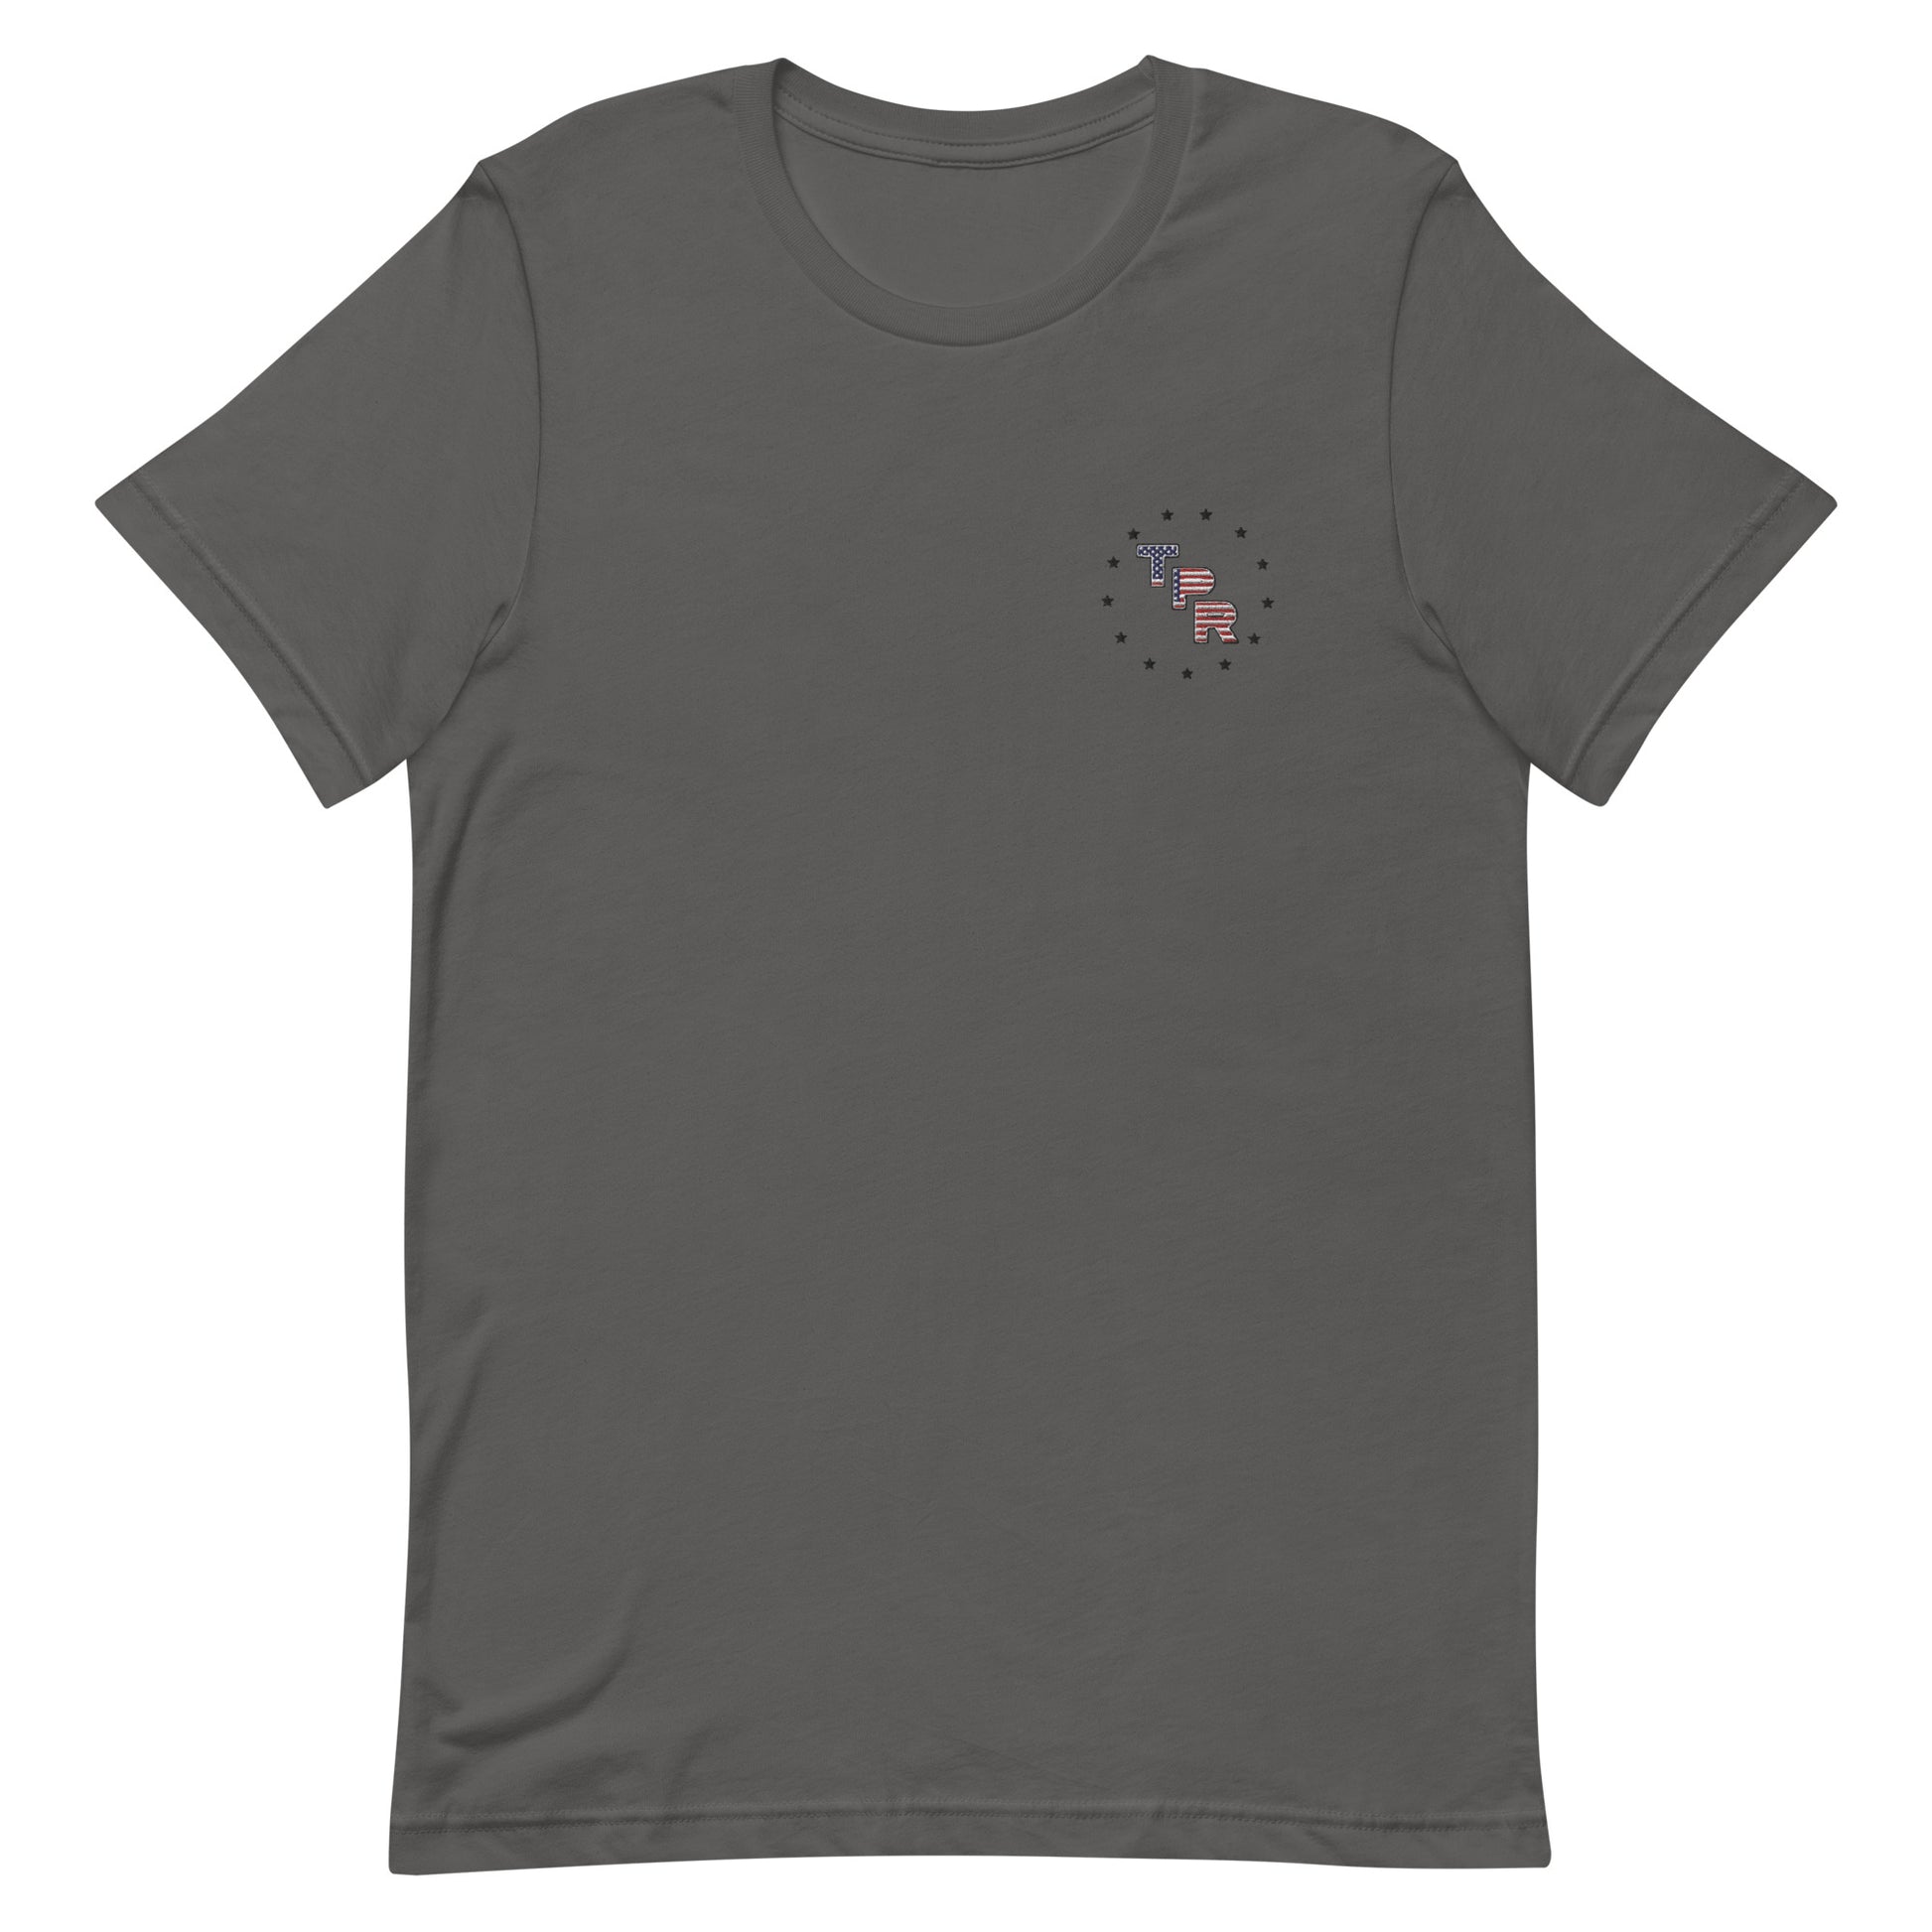 American-flag-edition-unisex-t-shirt-Asphalt